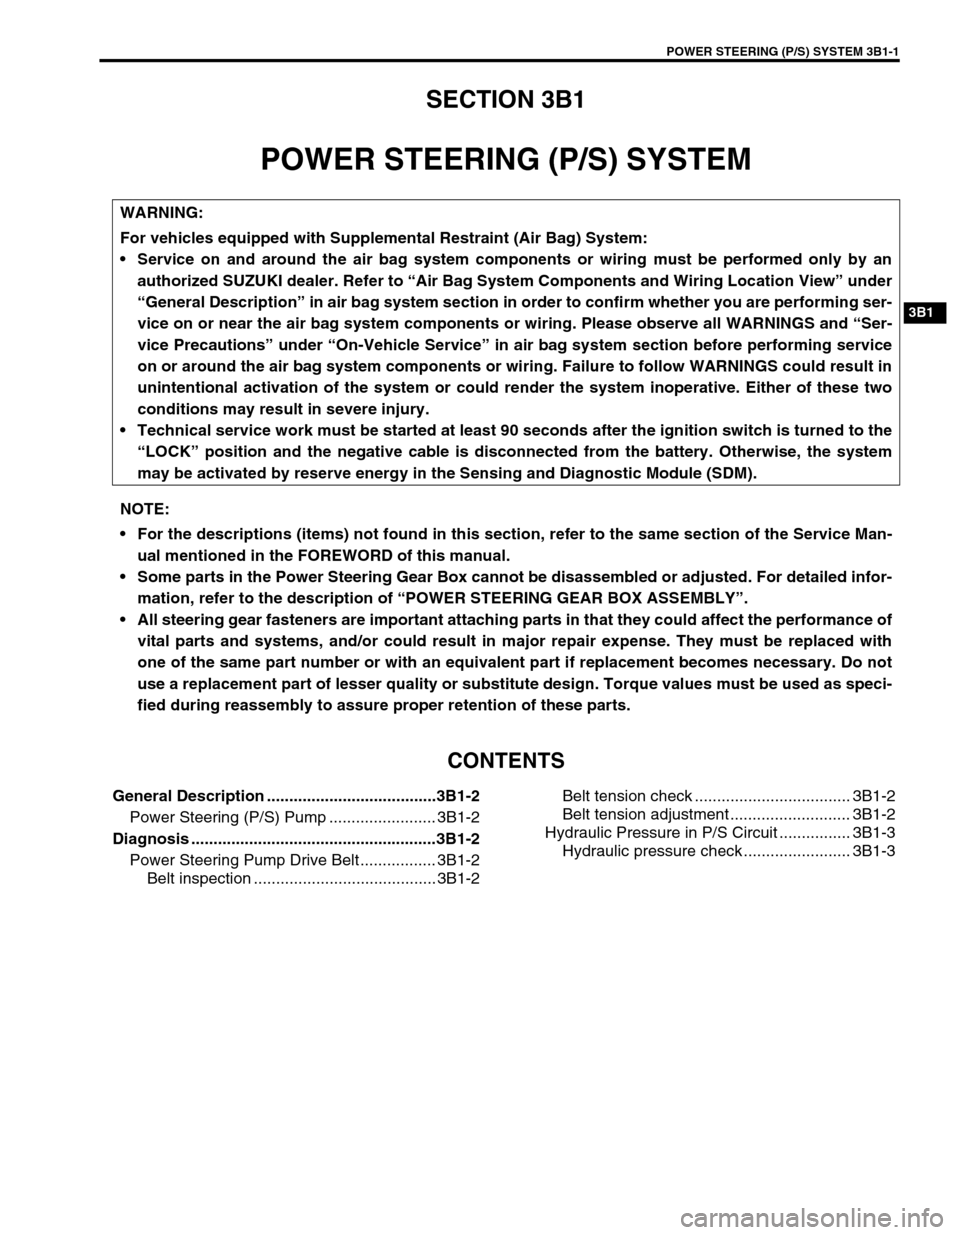 SUZUKI GRAND VITARA 1999 2.G Owners Manual POWER STEERING (P/S) SYSTEM 3B1-1
3B1
SECTION 3B1
POWER STEERING (P/S) SYSTEM
CONTENTS
General Description ......................................3B1-2
Power Steering (P/S) Pump .......................